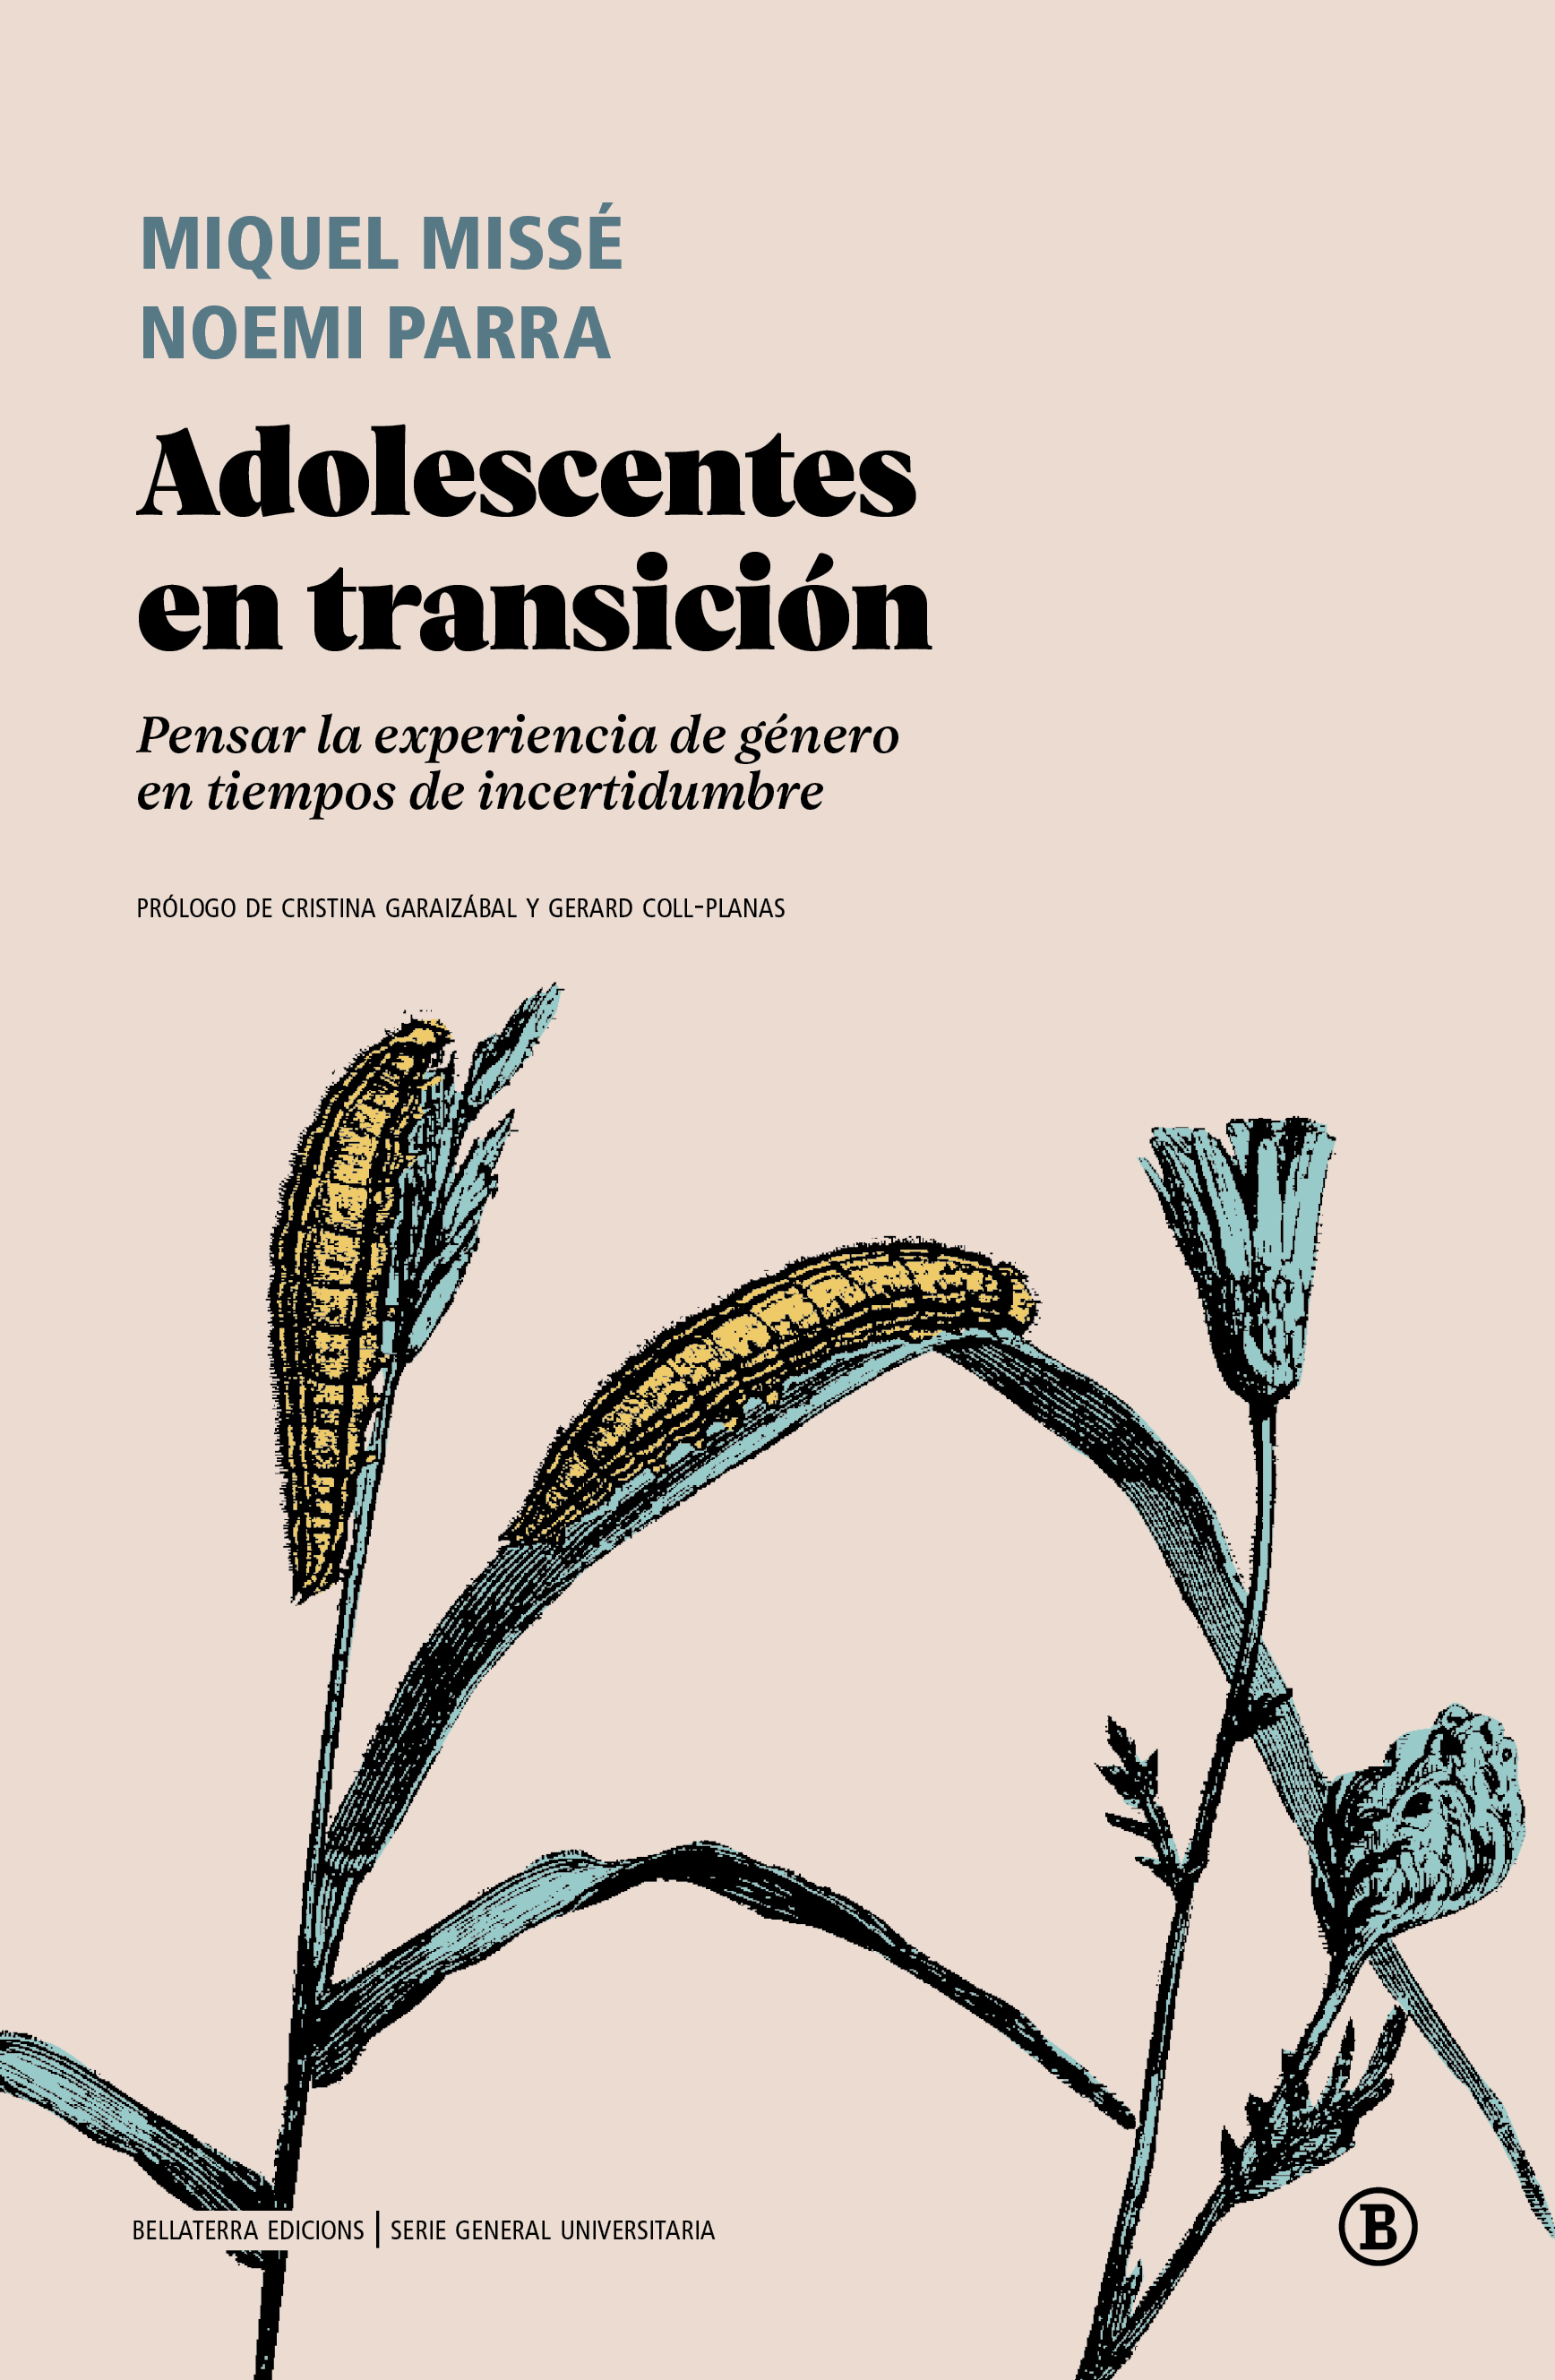 Adolescentes en transición - Miquel Missé | Noemi Parra